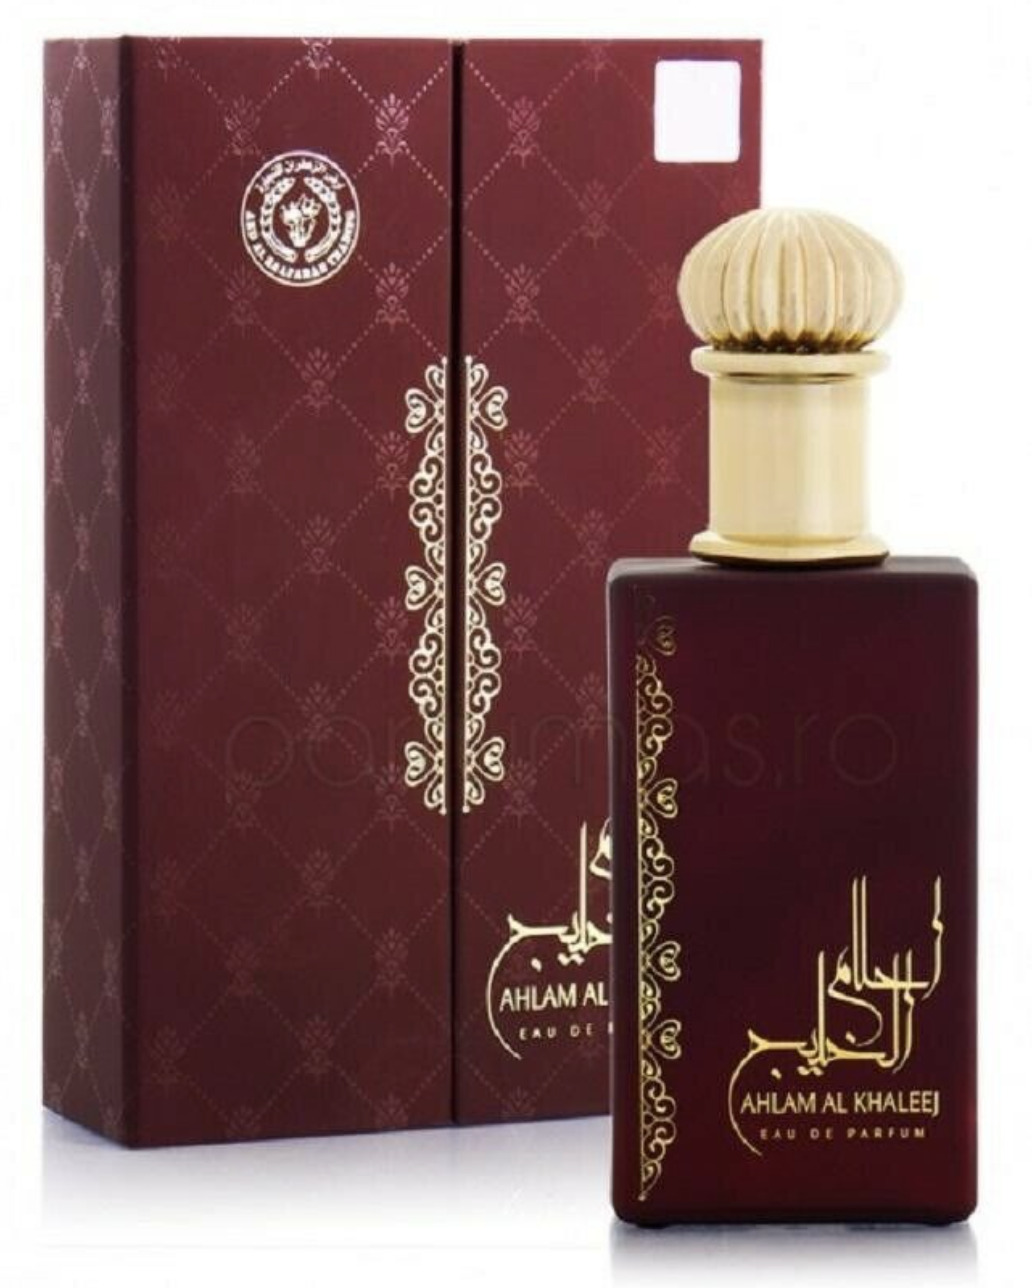 Ahlam Al Khaleej EDP Perfume By Ard Al Zaafaran - TOP USA SELLER + FREE SHIPPING